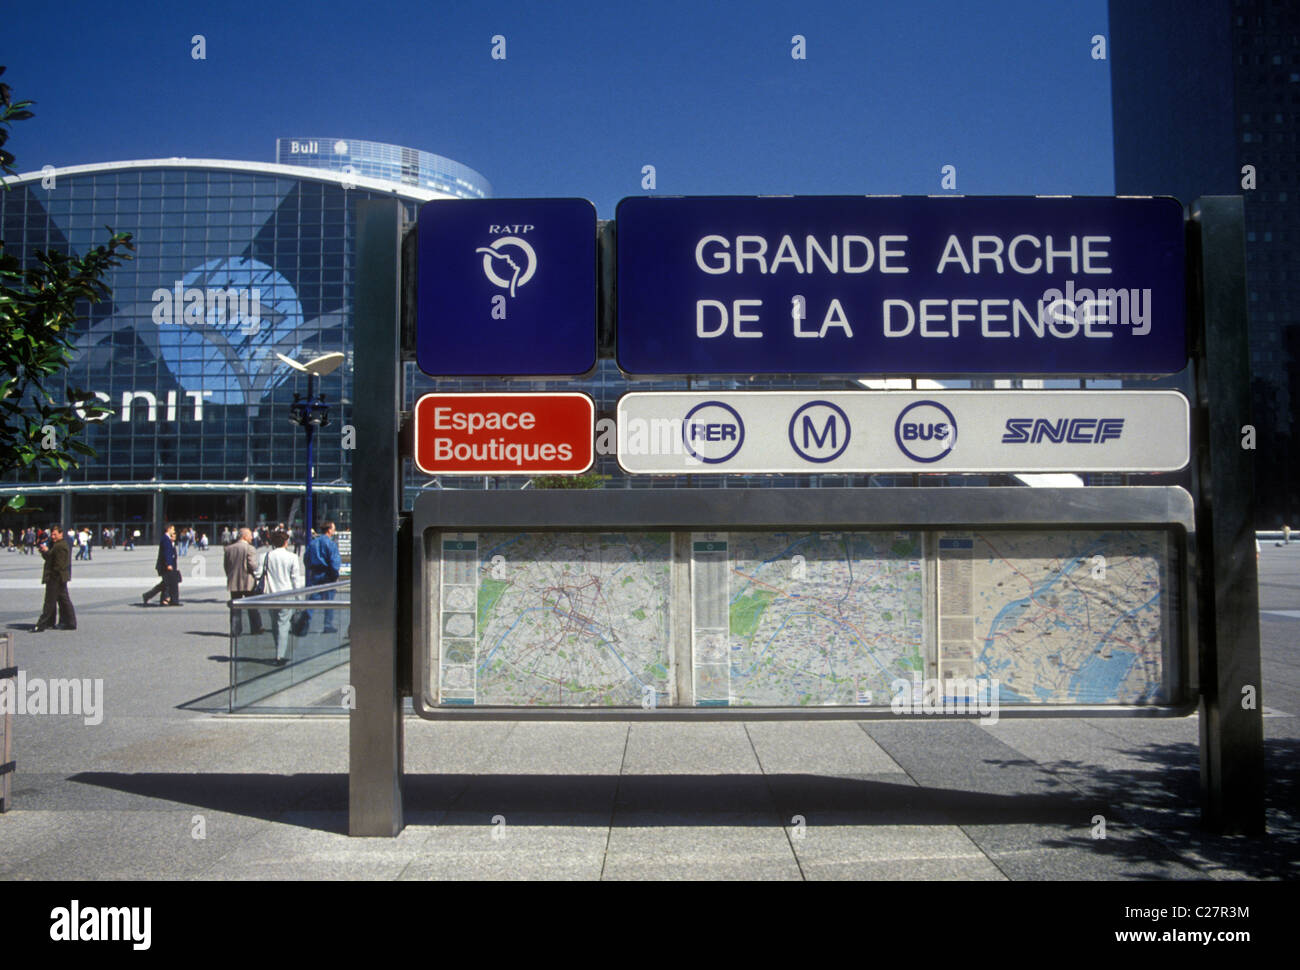 Train and bus service at Grande Arche de la Defense city of Paris Ile-de-France region France Europe Stock Photo